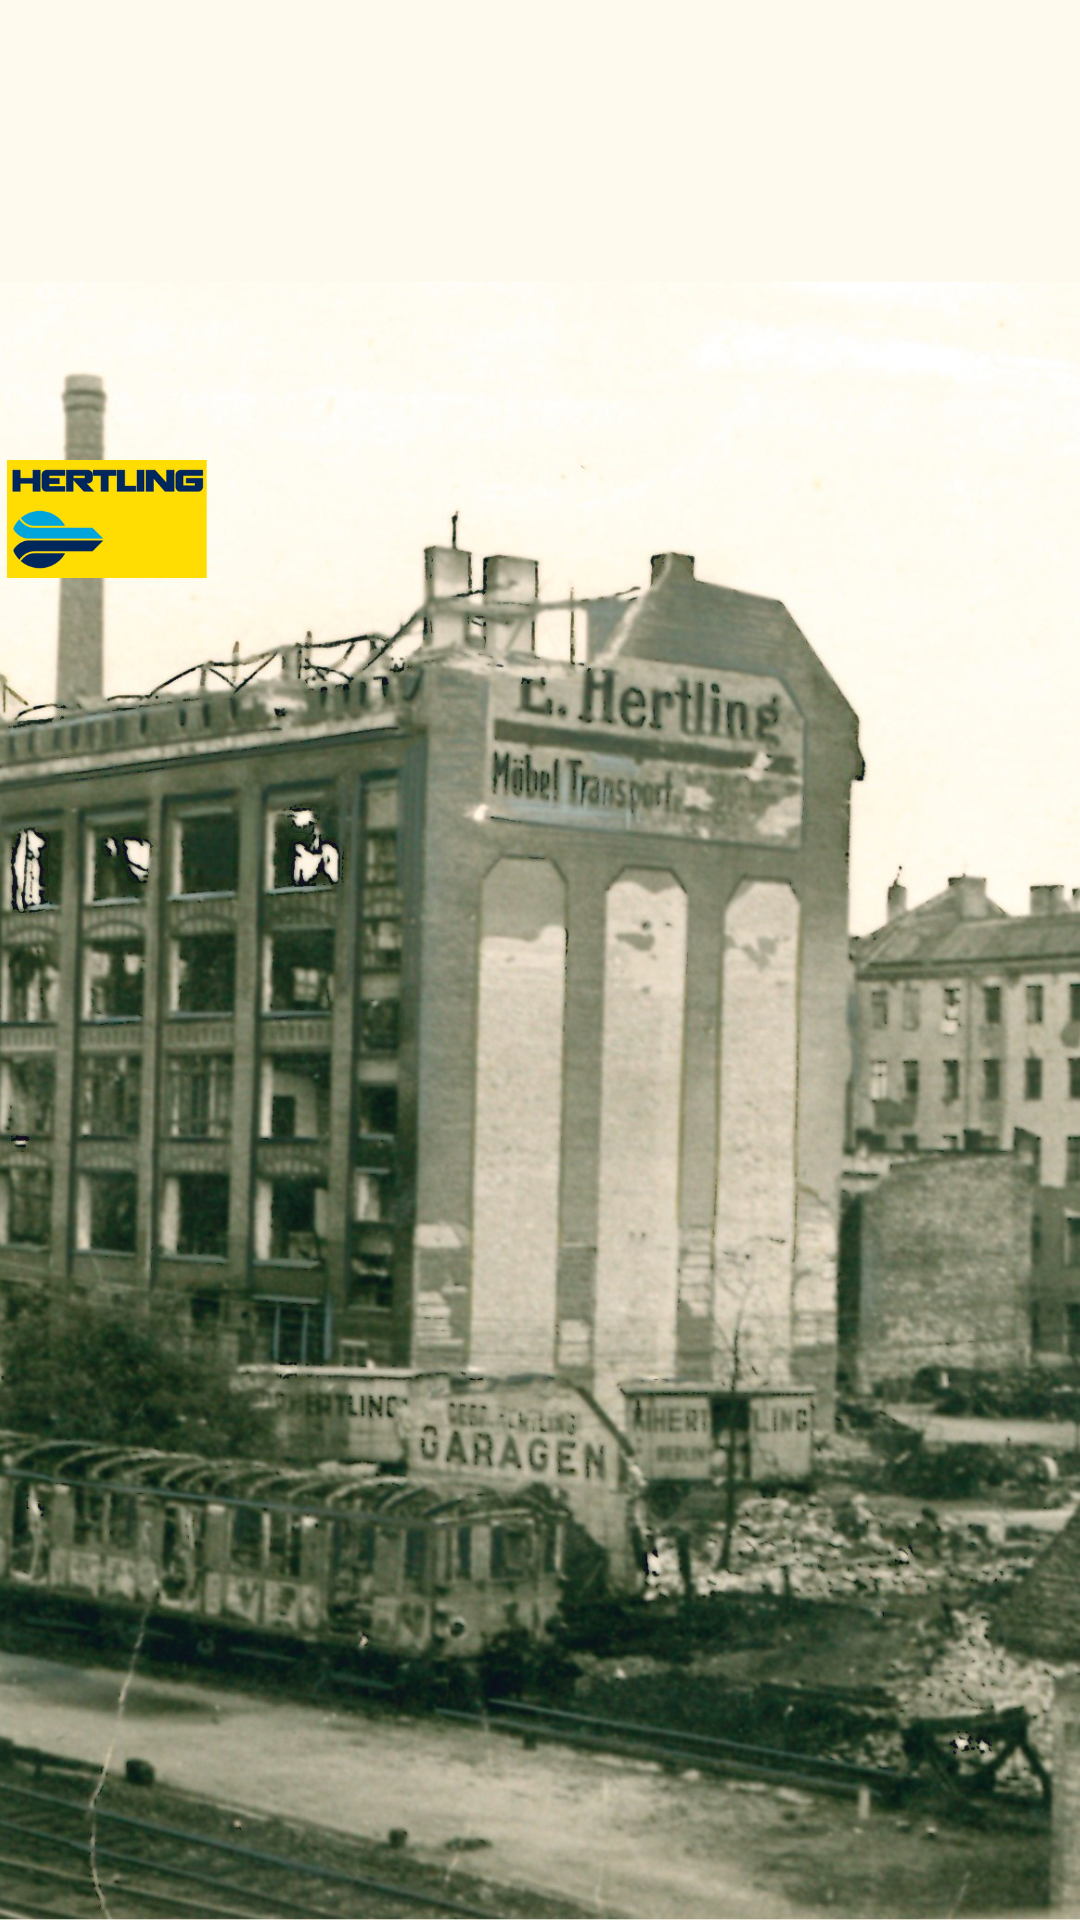 Hertling building after the 2nd world war